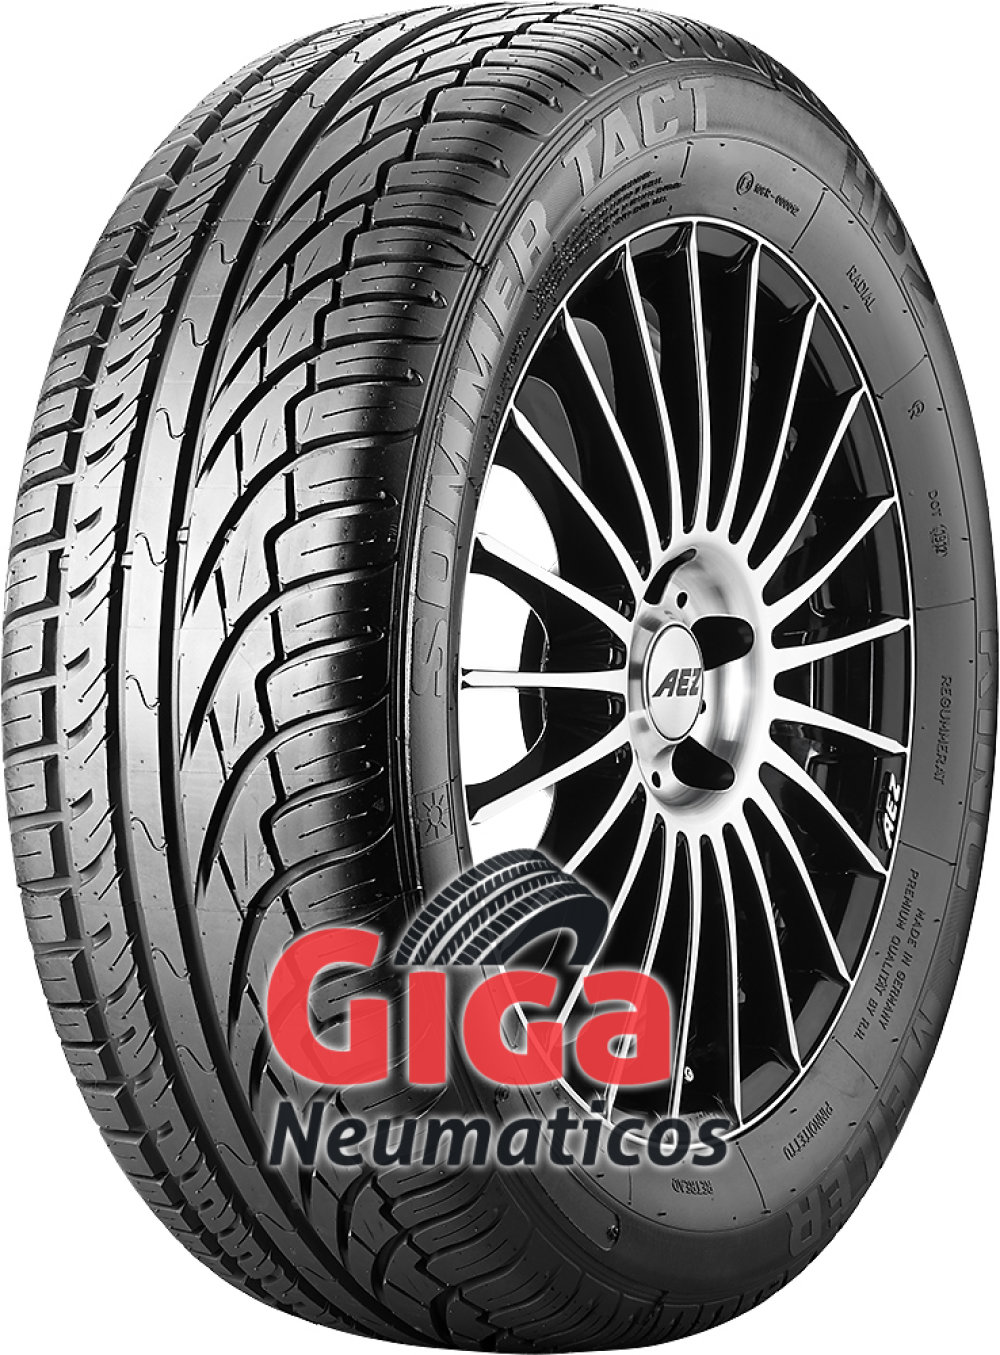 Tercero explorar Generacion Comprar neumáticos King Meiler HPZ 195/65 R15 91H a precios económicos -  giga-neumaticos.es